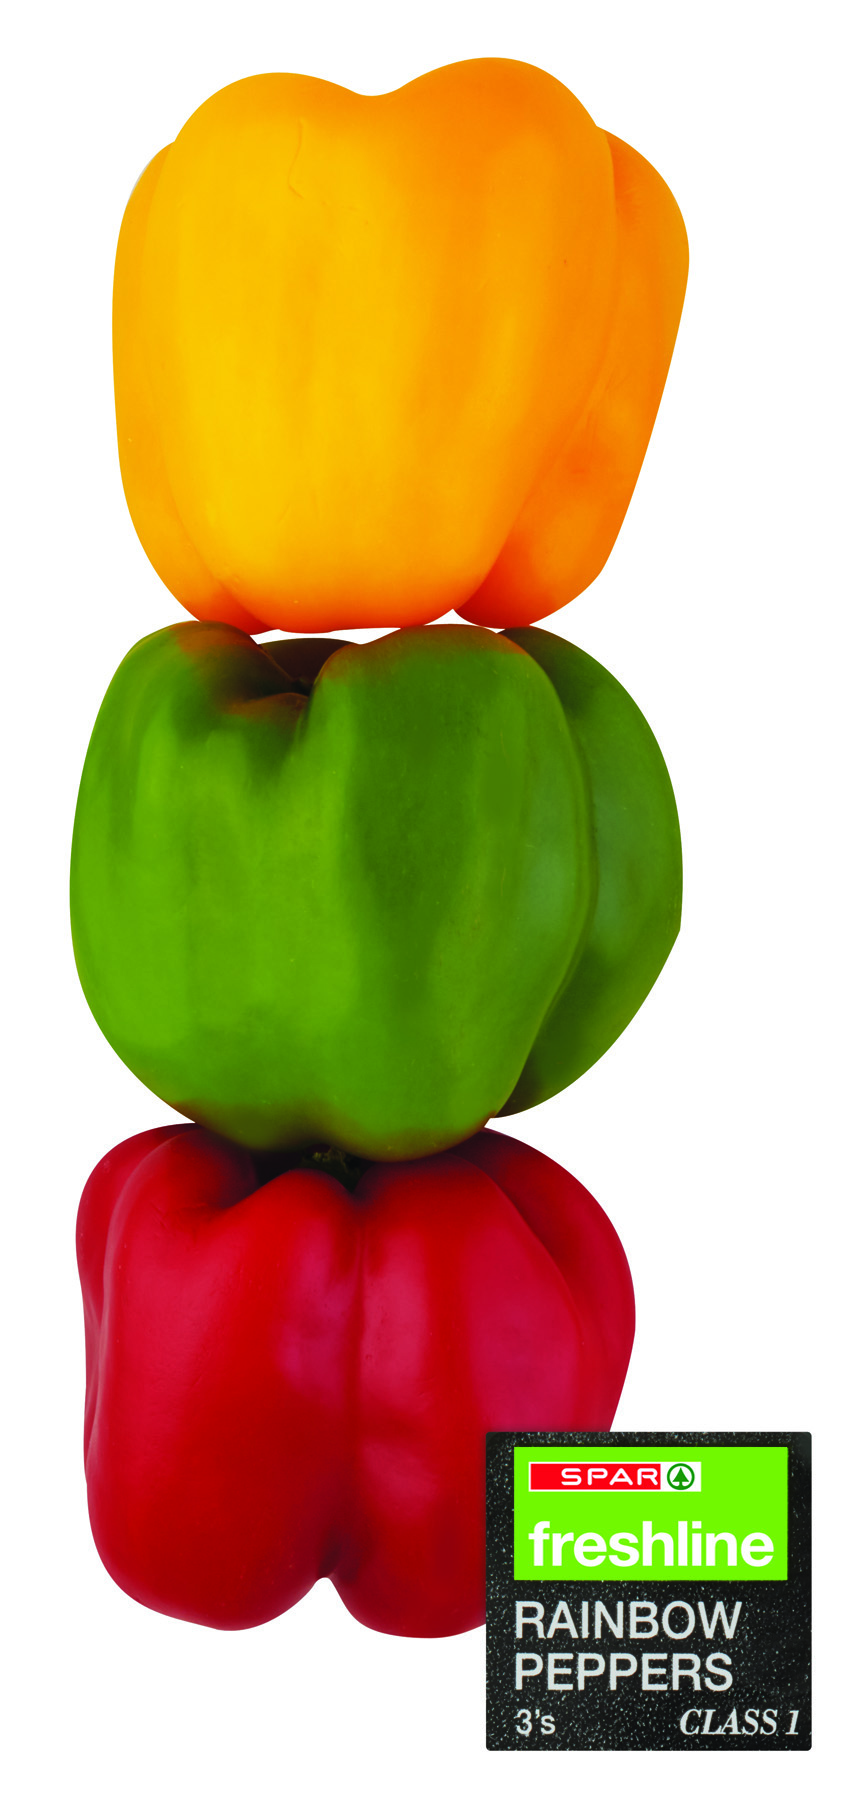 freshline rainbow peppers 